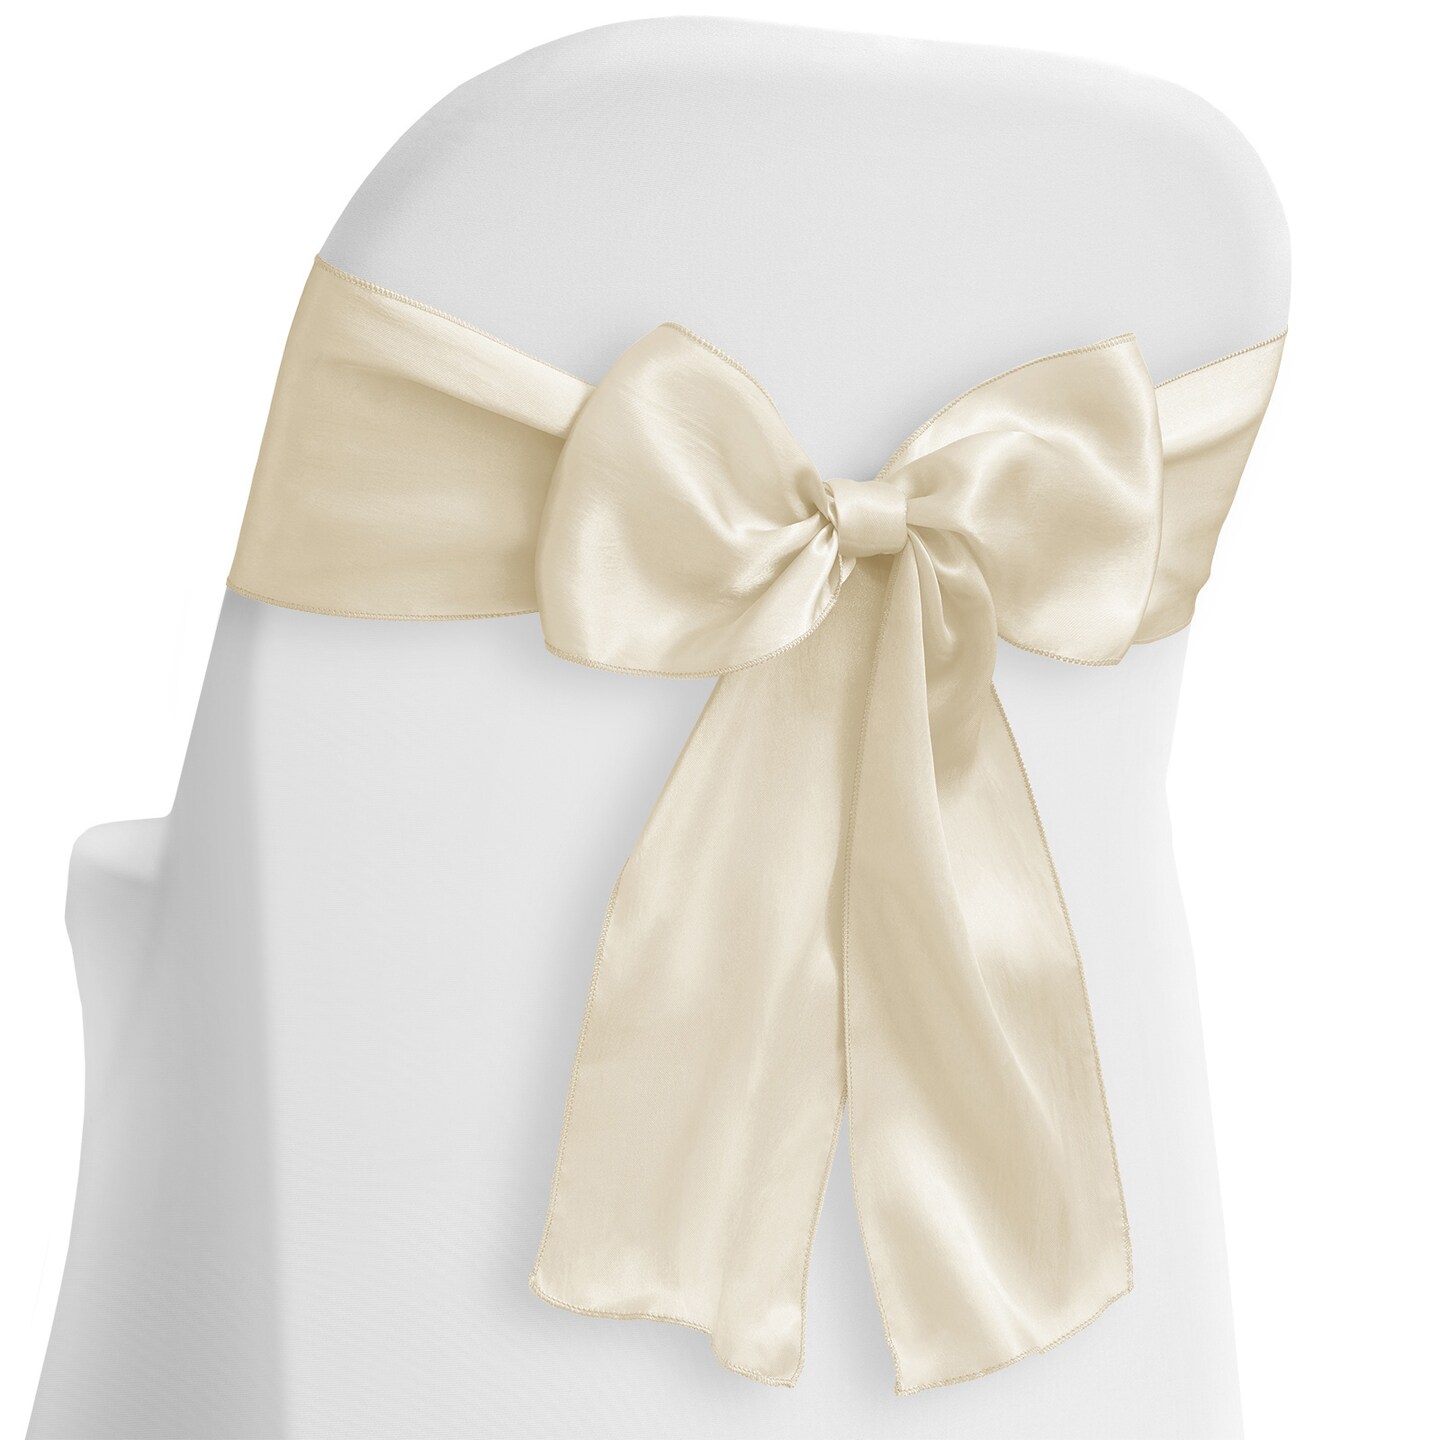 Lann&#x27;s Linens - 10 Elegant Satin Wedding/Party Chair Cover Sashes/Bows - Ribbon Tie Back Sash